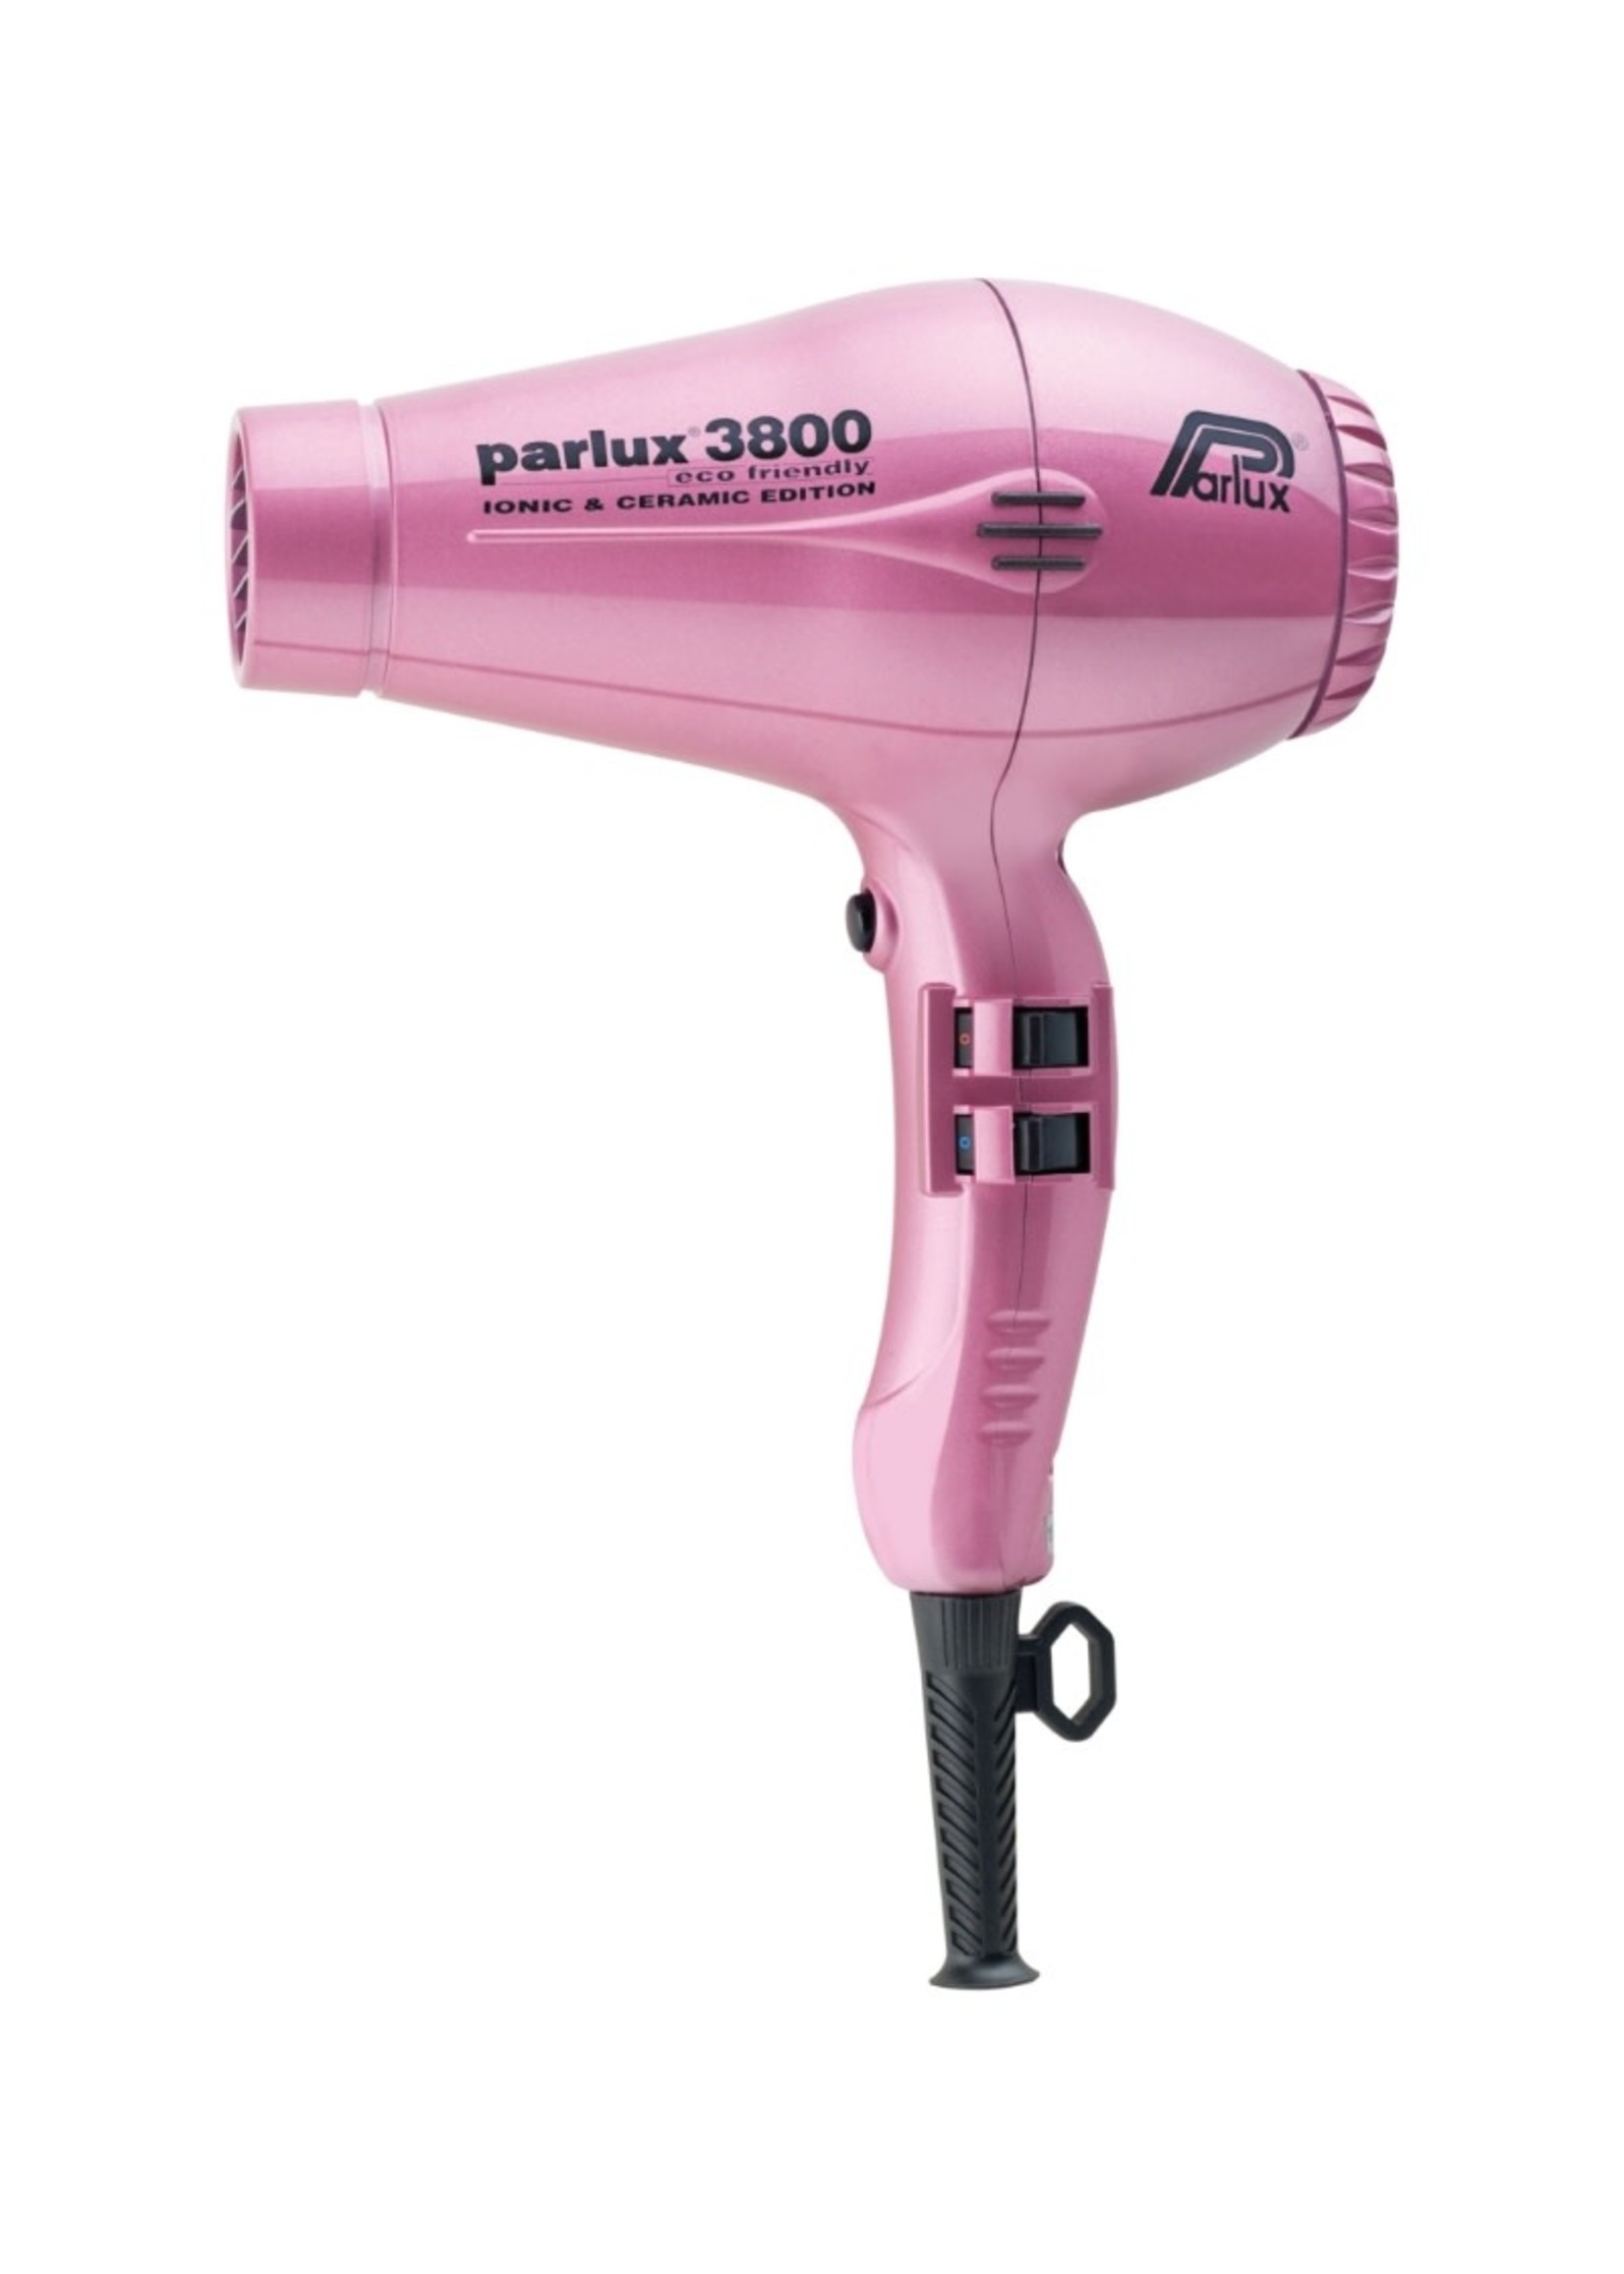 Parlux Parlux 3800 Ceramic & Ionic Hair Dryer 2100W - Pink